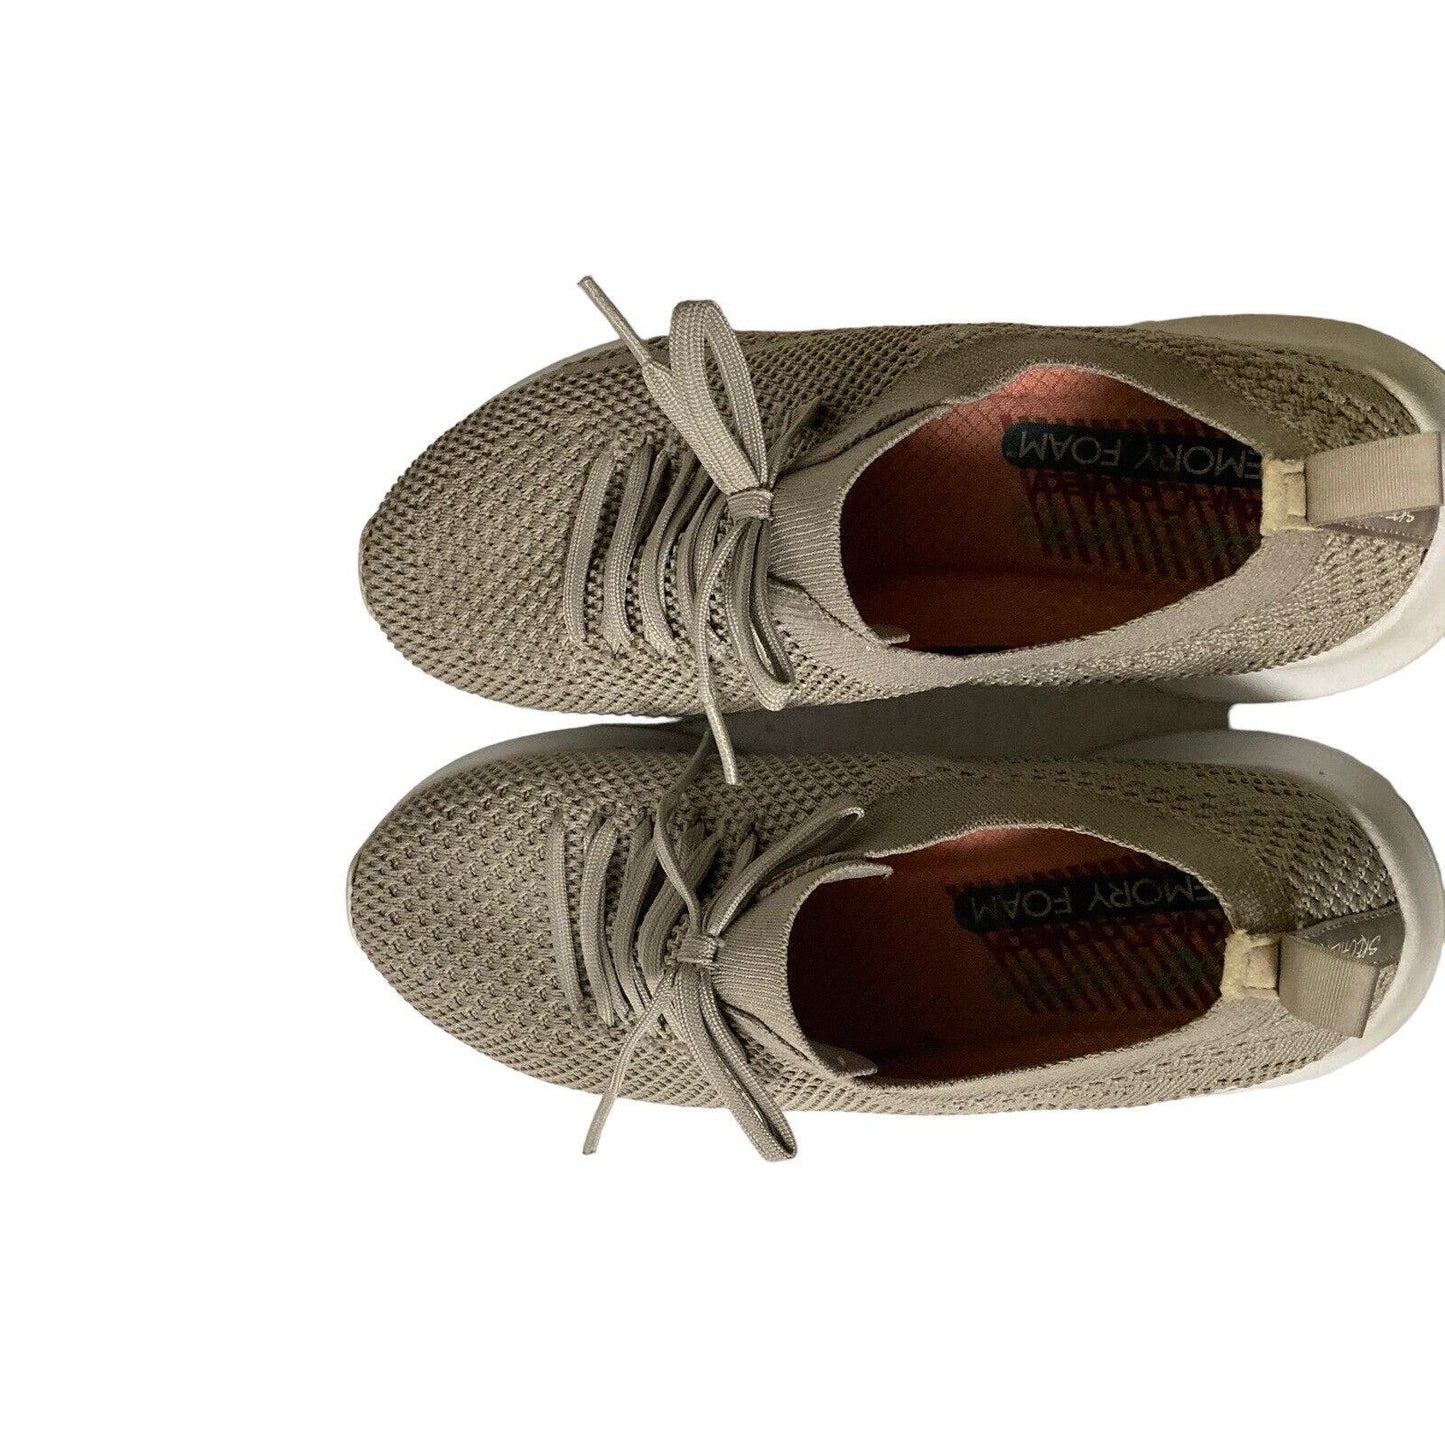 Skechers Ultra Flex 3.0 - Big Plan Taupe Sneakers Size 7.5